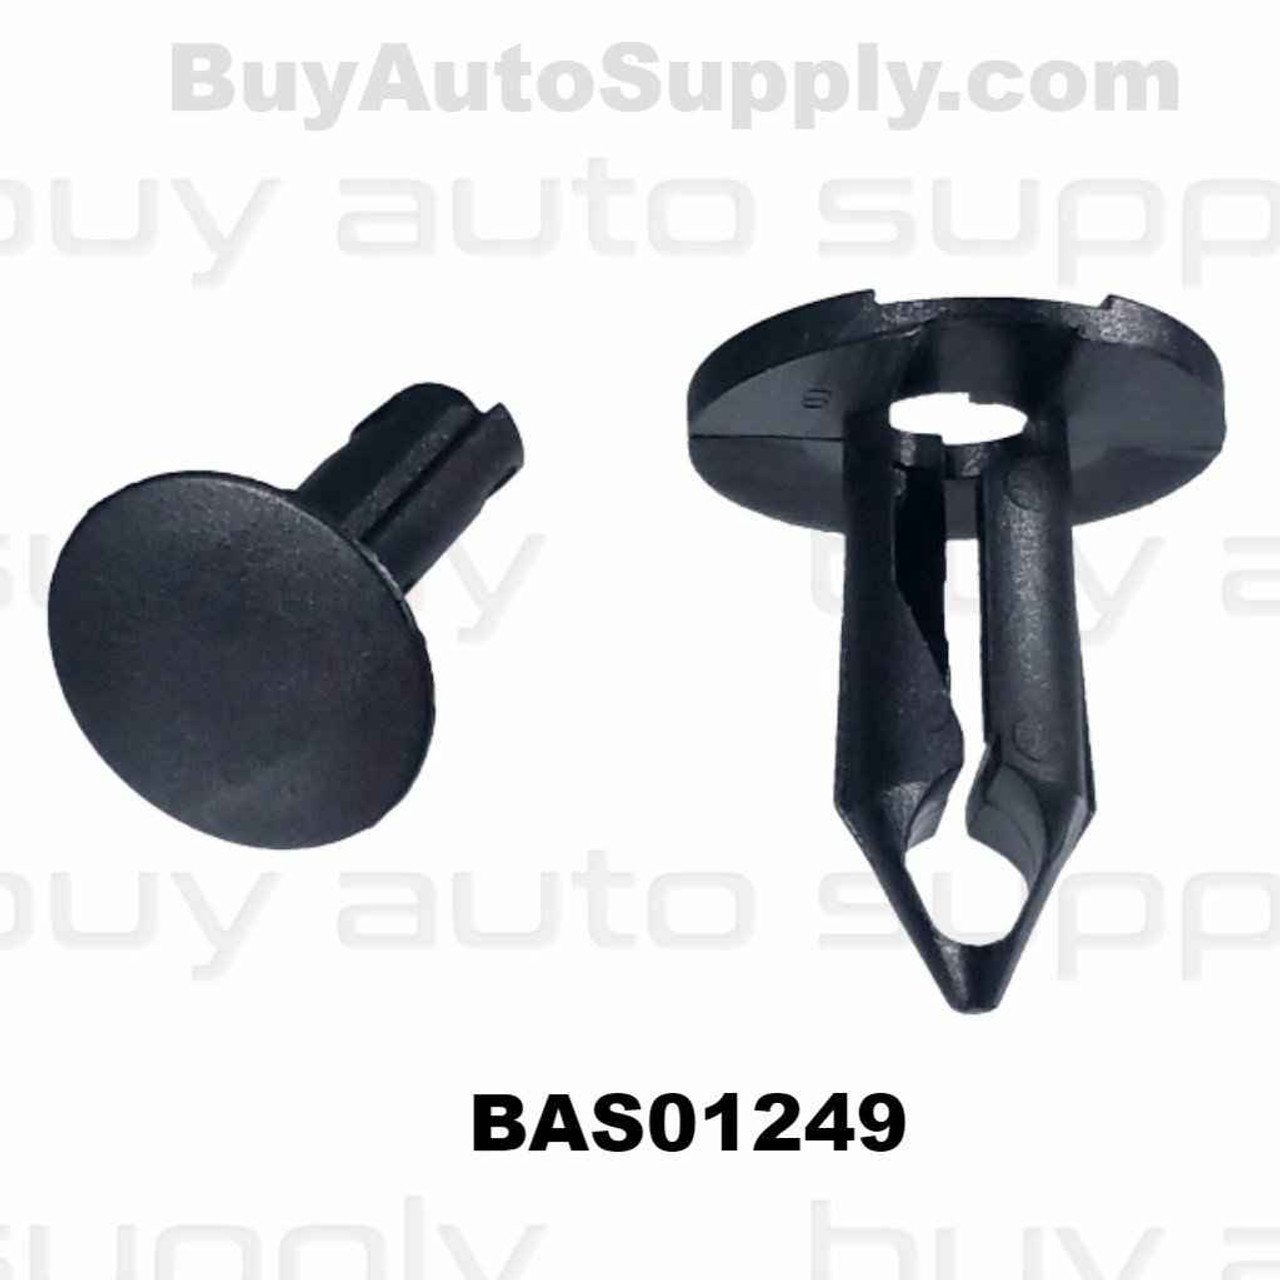 BAS01249 - Chrysler / Gm / Ford Push Retainer Clip (1860PK)